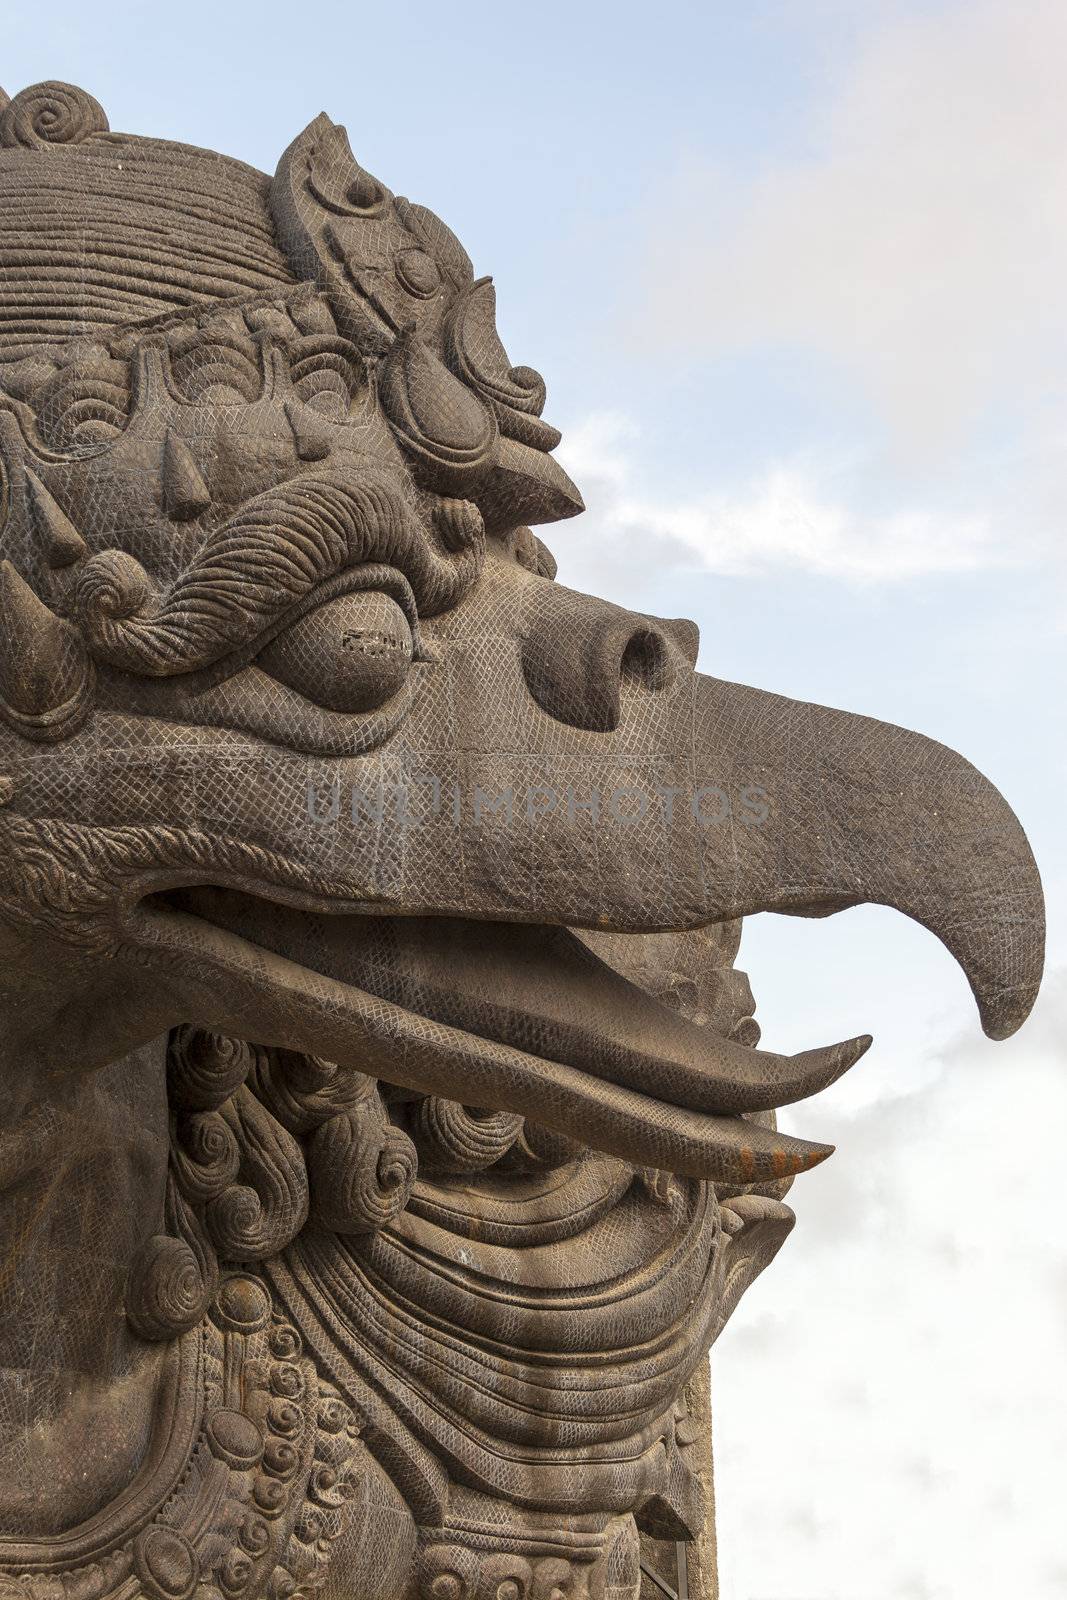 Large statue of Garuda in Bali